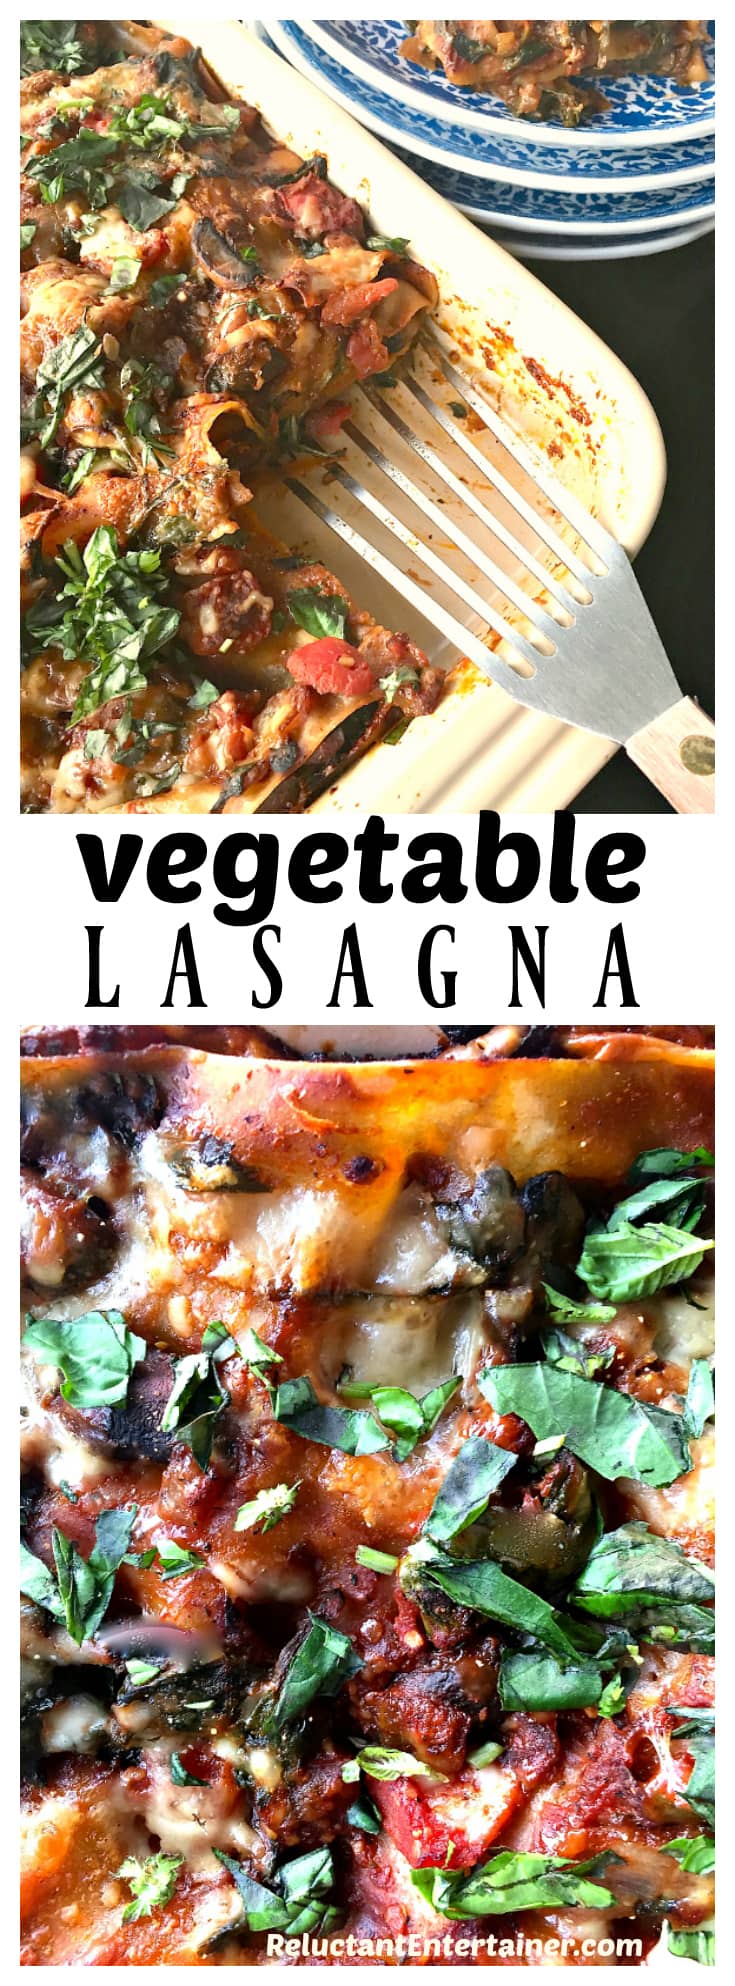 Vegetable Lasagna at ReluctantEntertainer.com